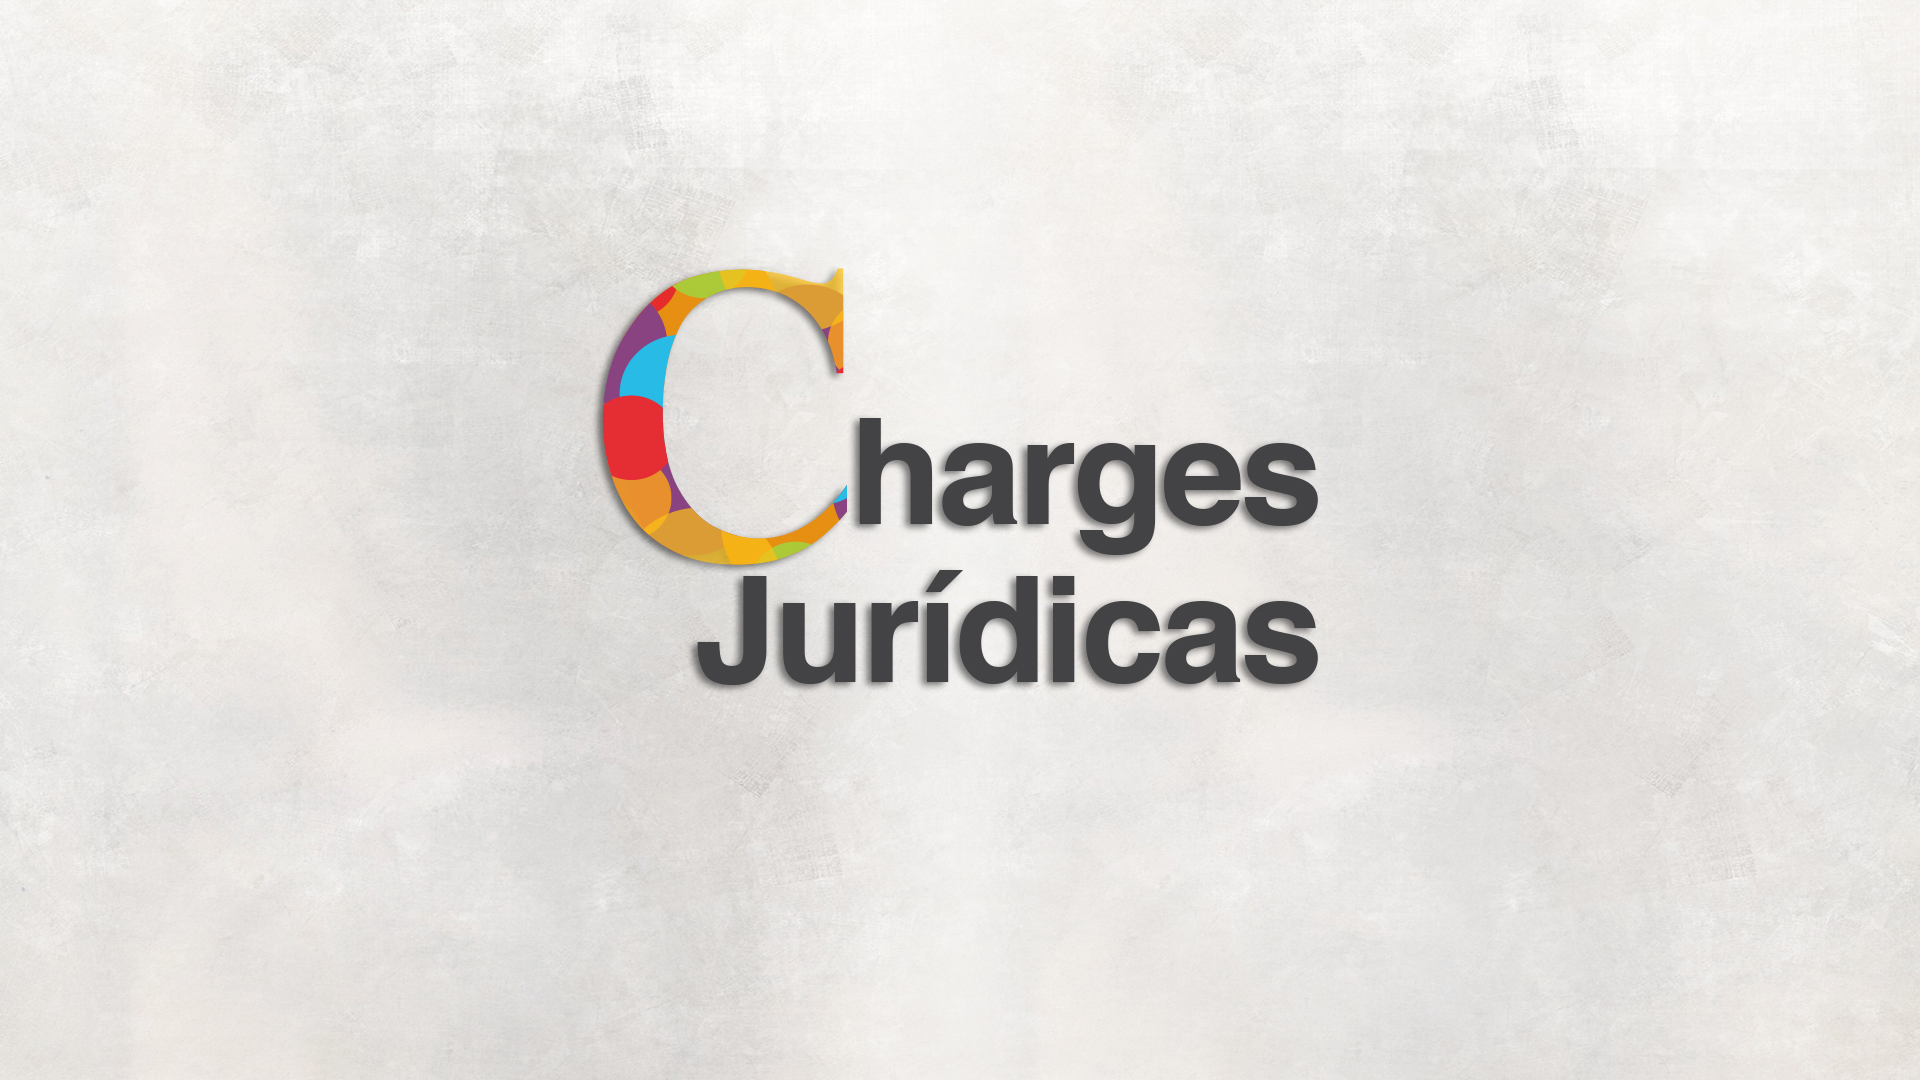 Charges Jurdicas